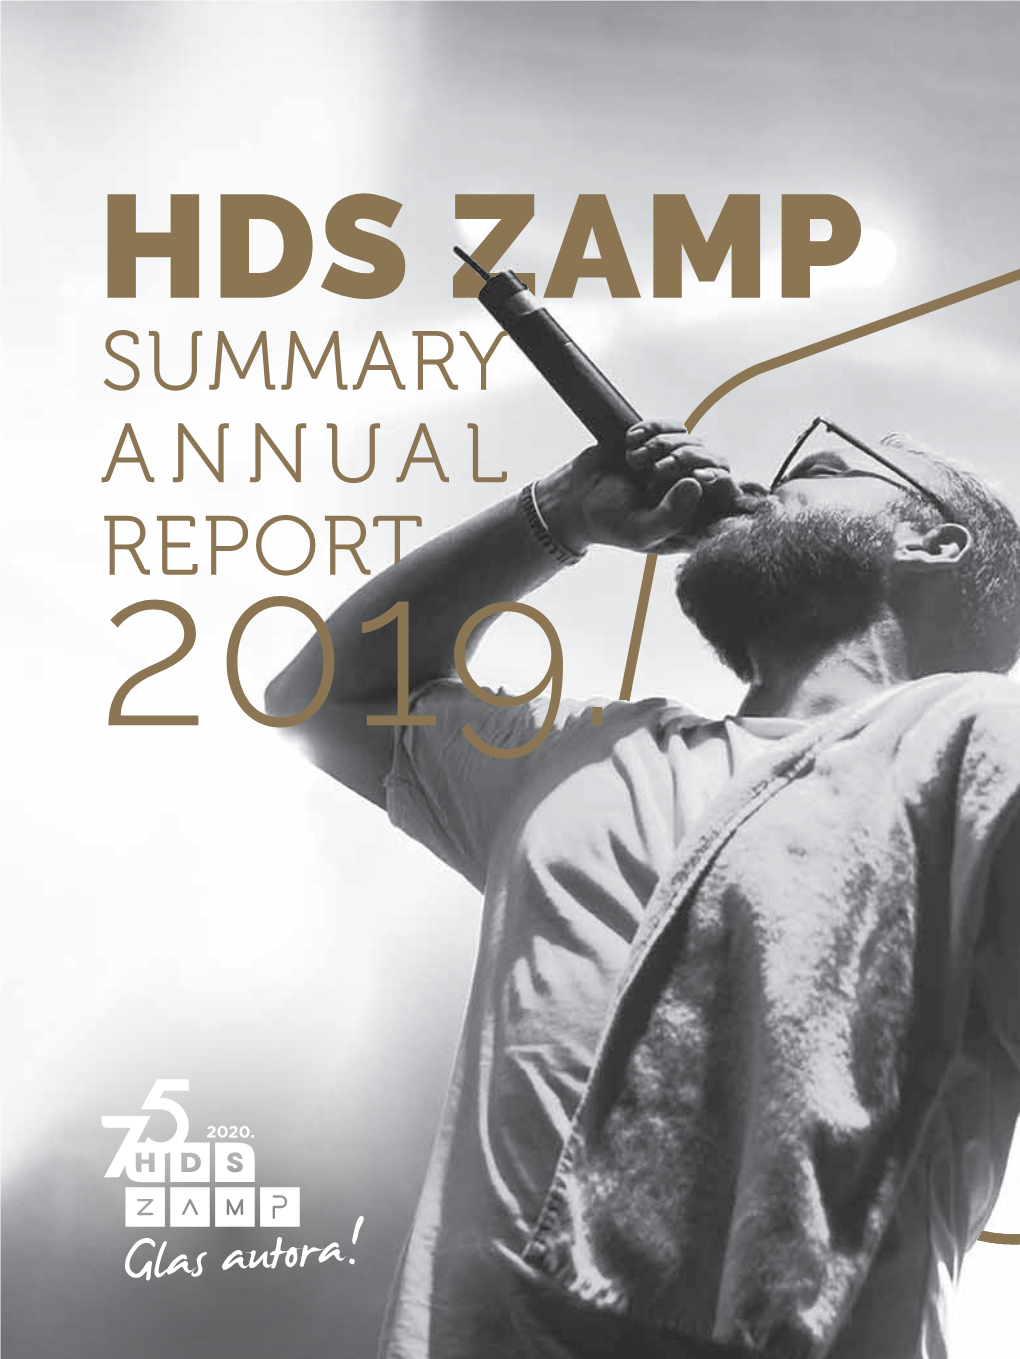 Summary Annual Report 2019